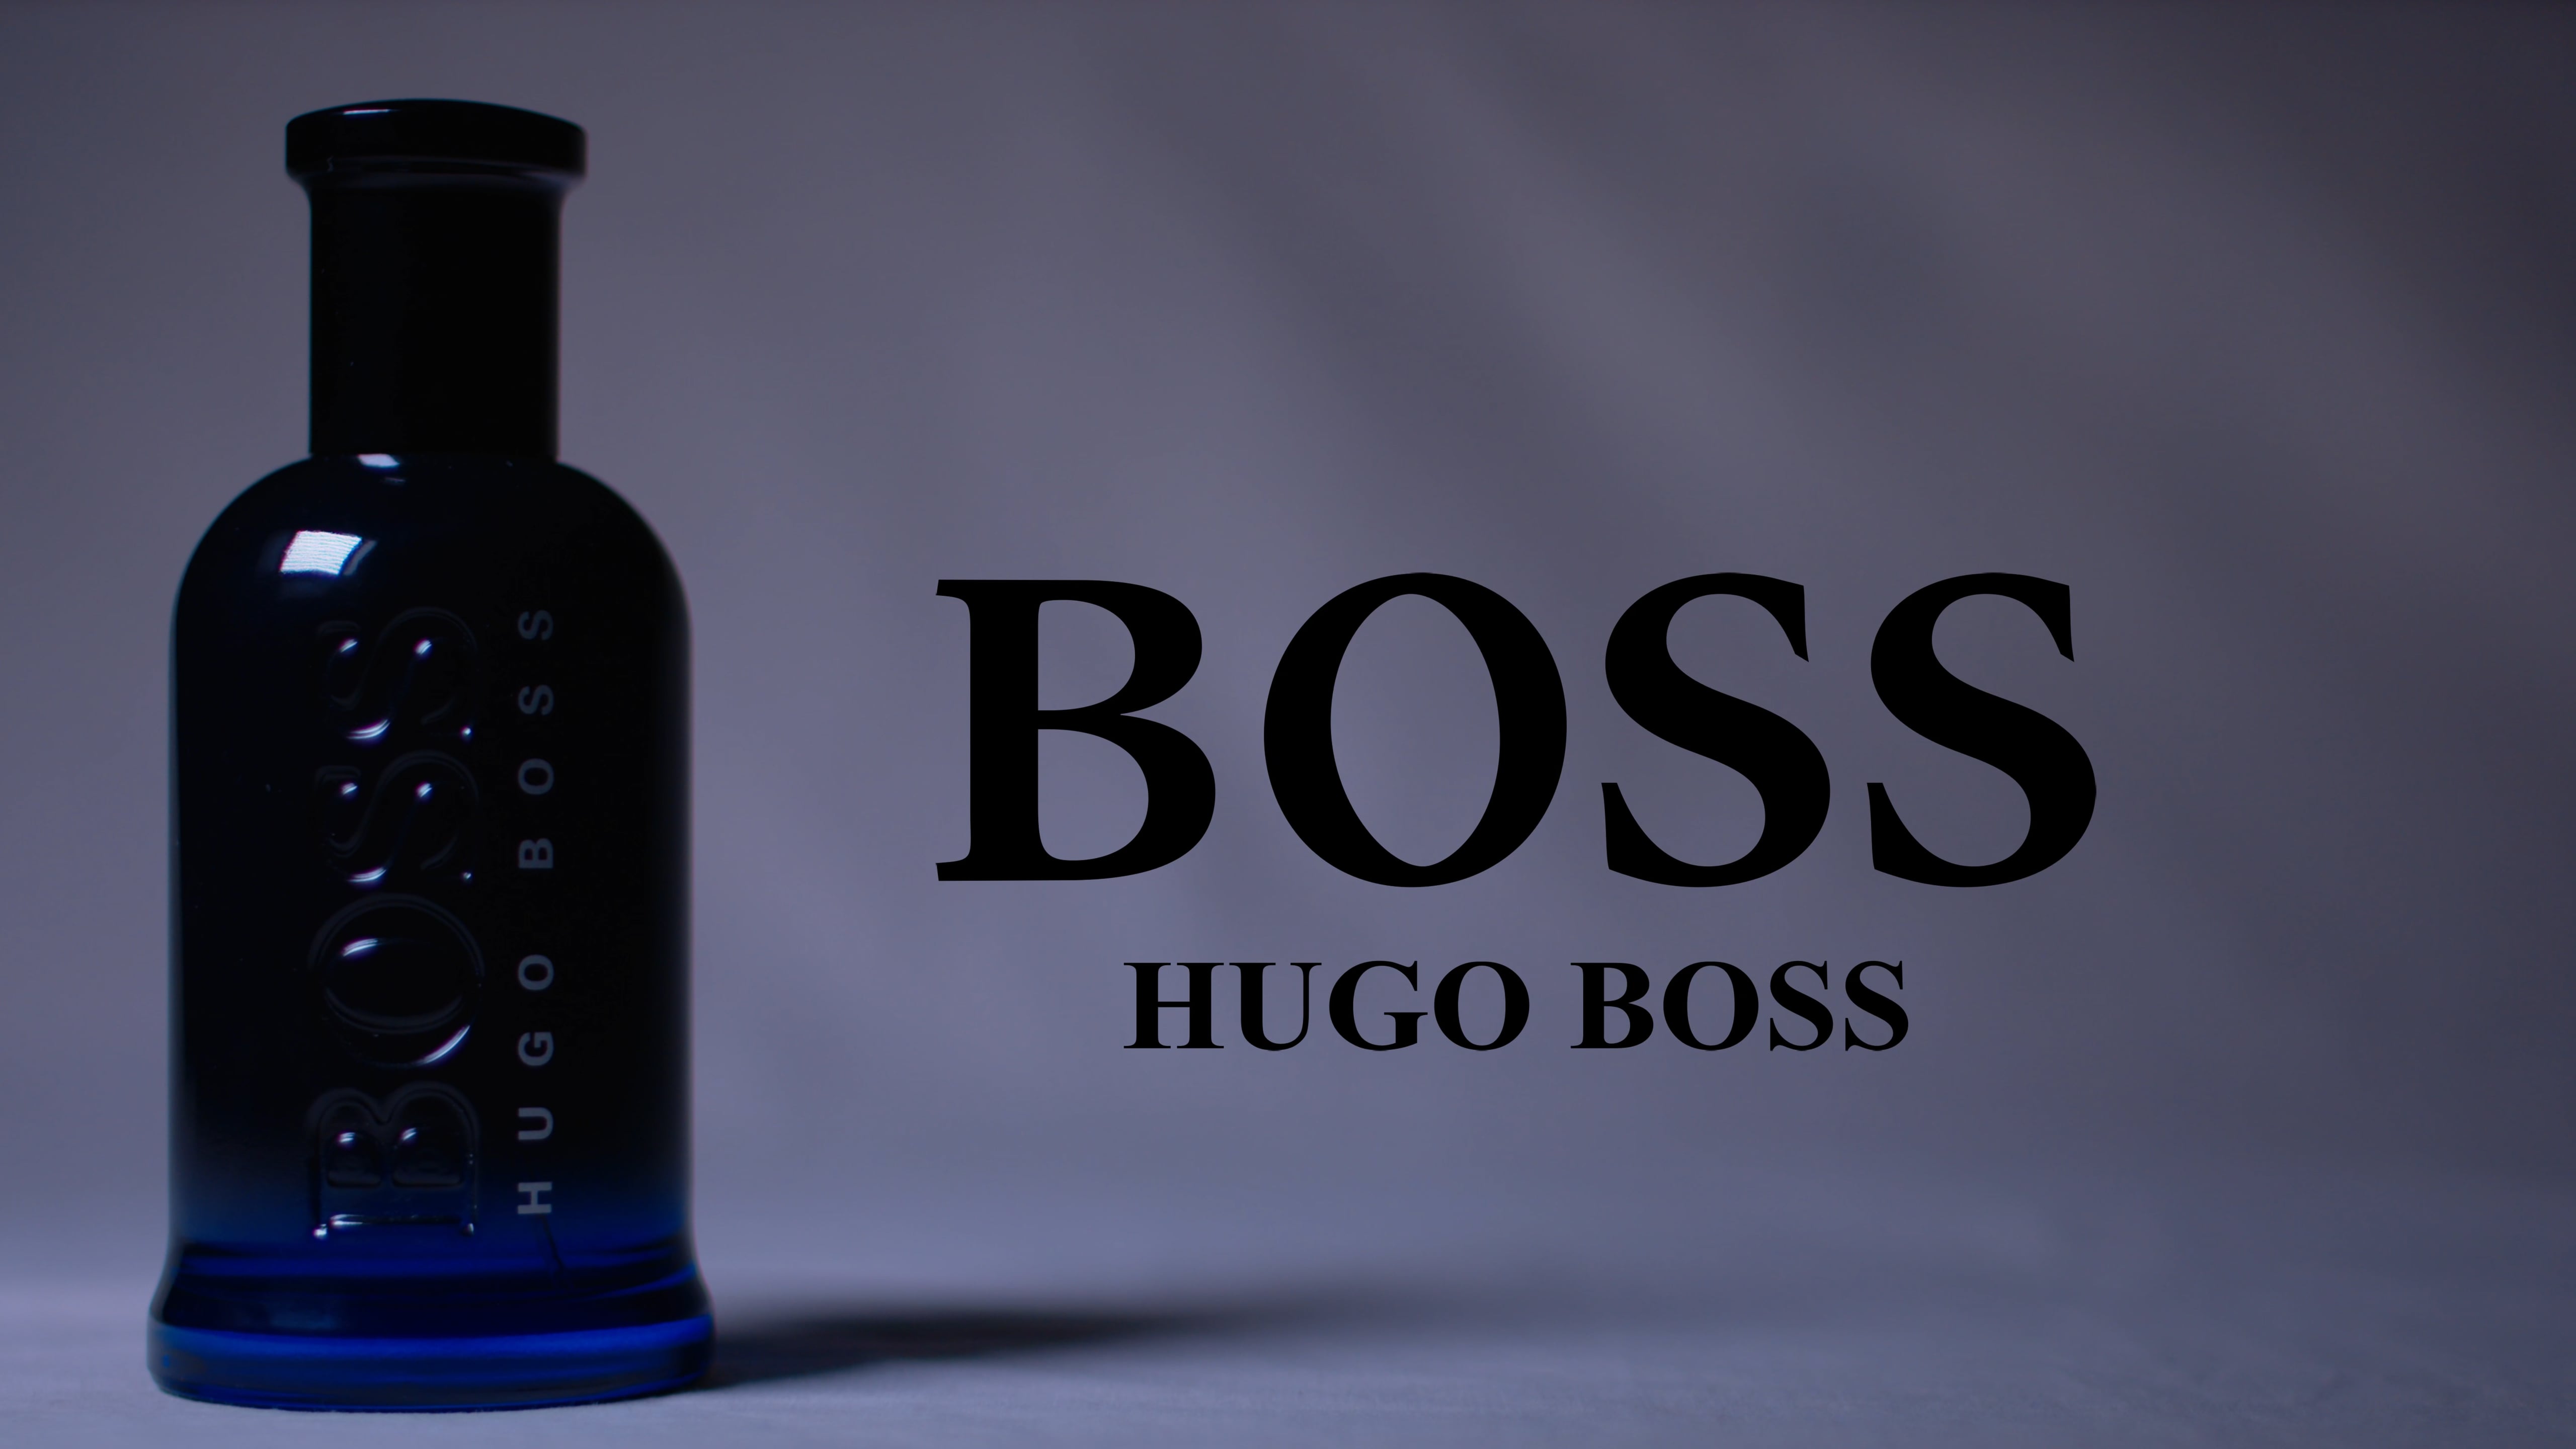 Hugo Boss advert on Vimeo